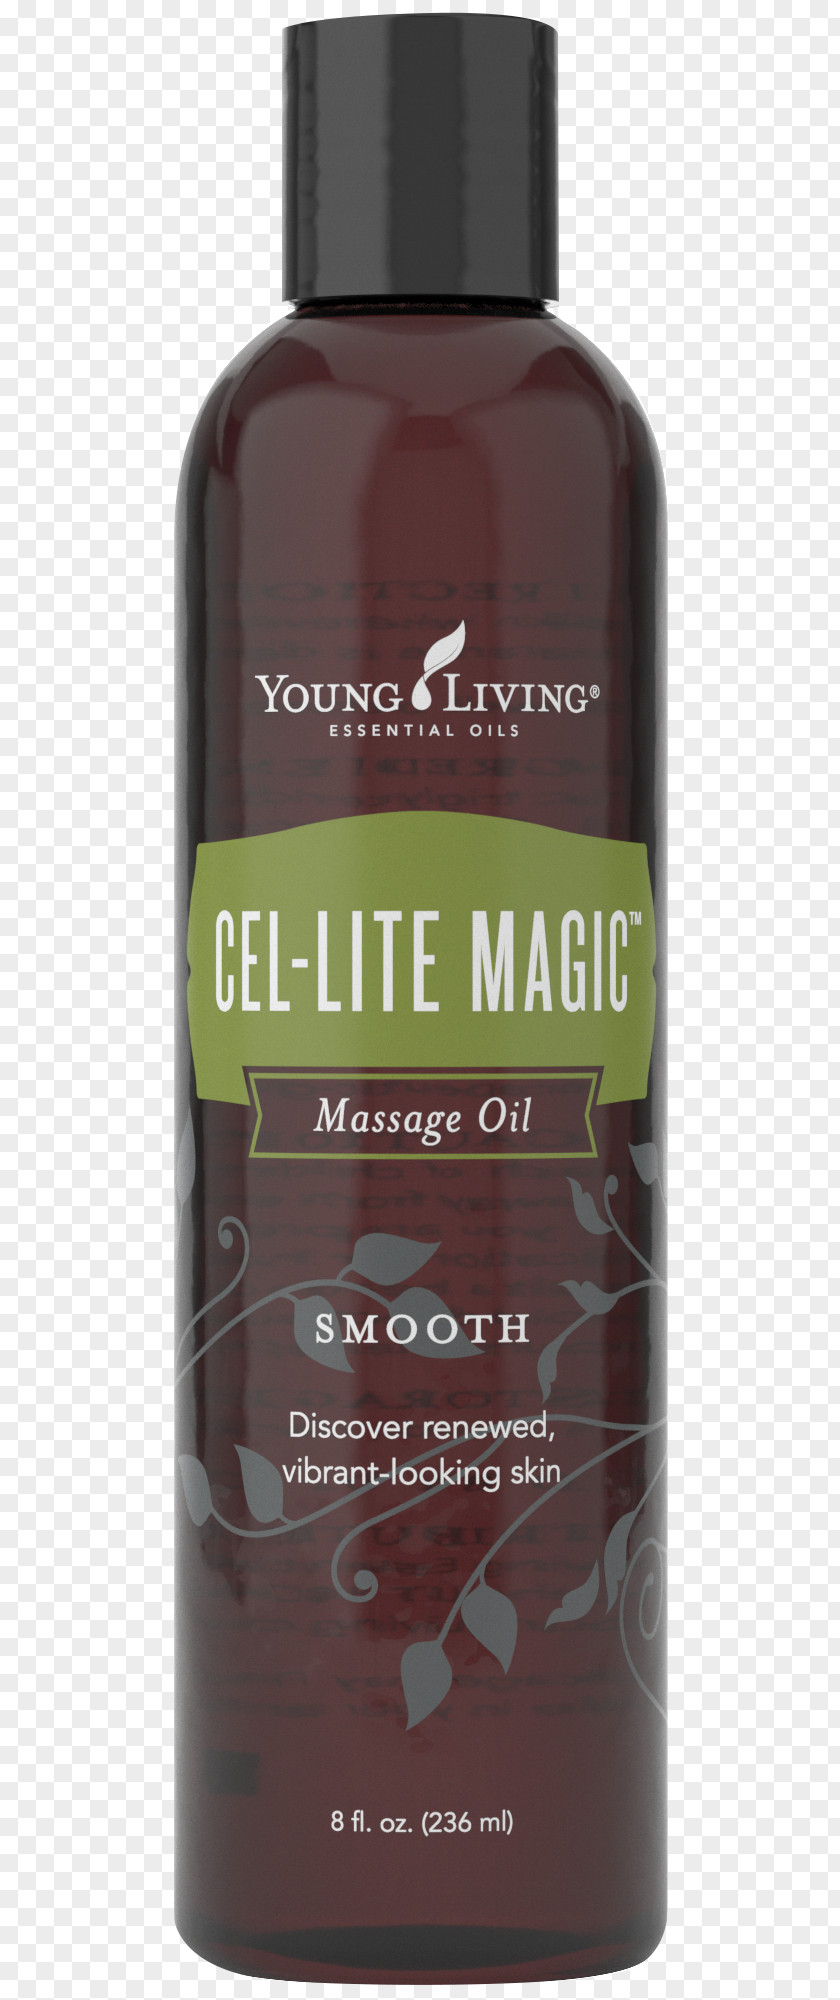 Young Living Seedlings Cel-Lite Magic Massage Oil 8 OZ Bottle By Essential V-6 Enhanced Vegetable Complex Oz (236 Ml) PNG